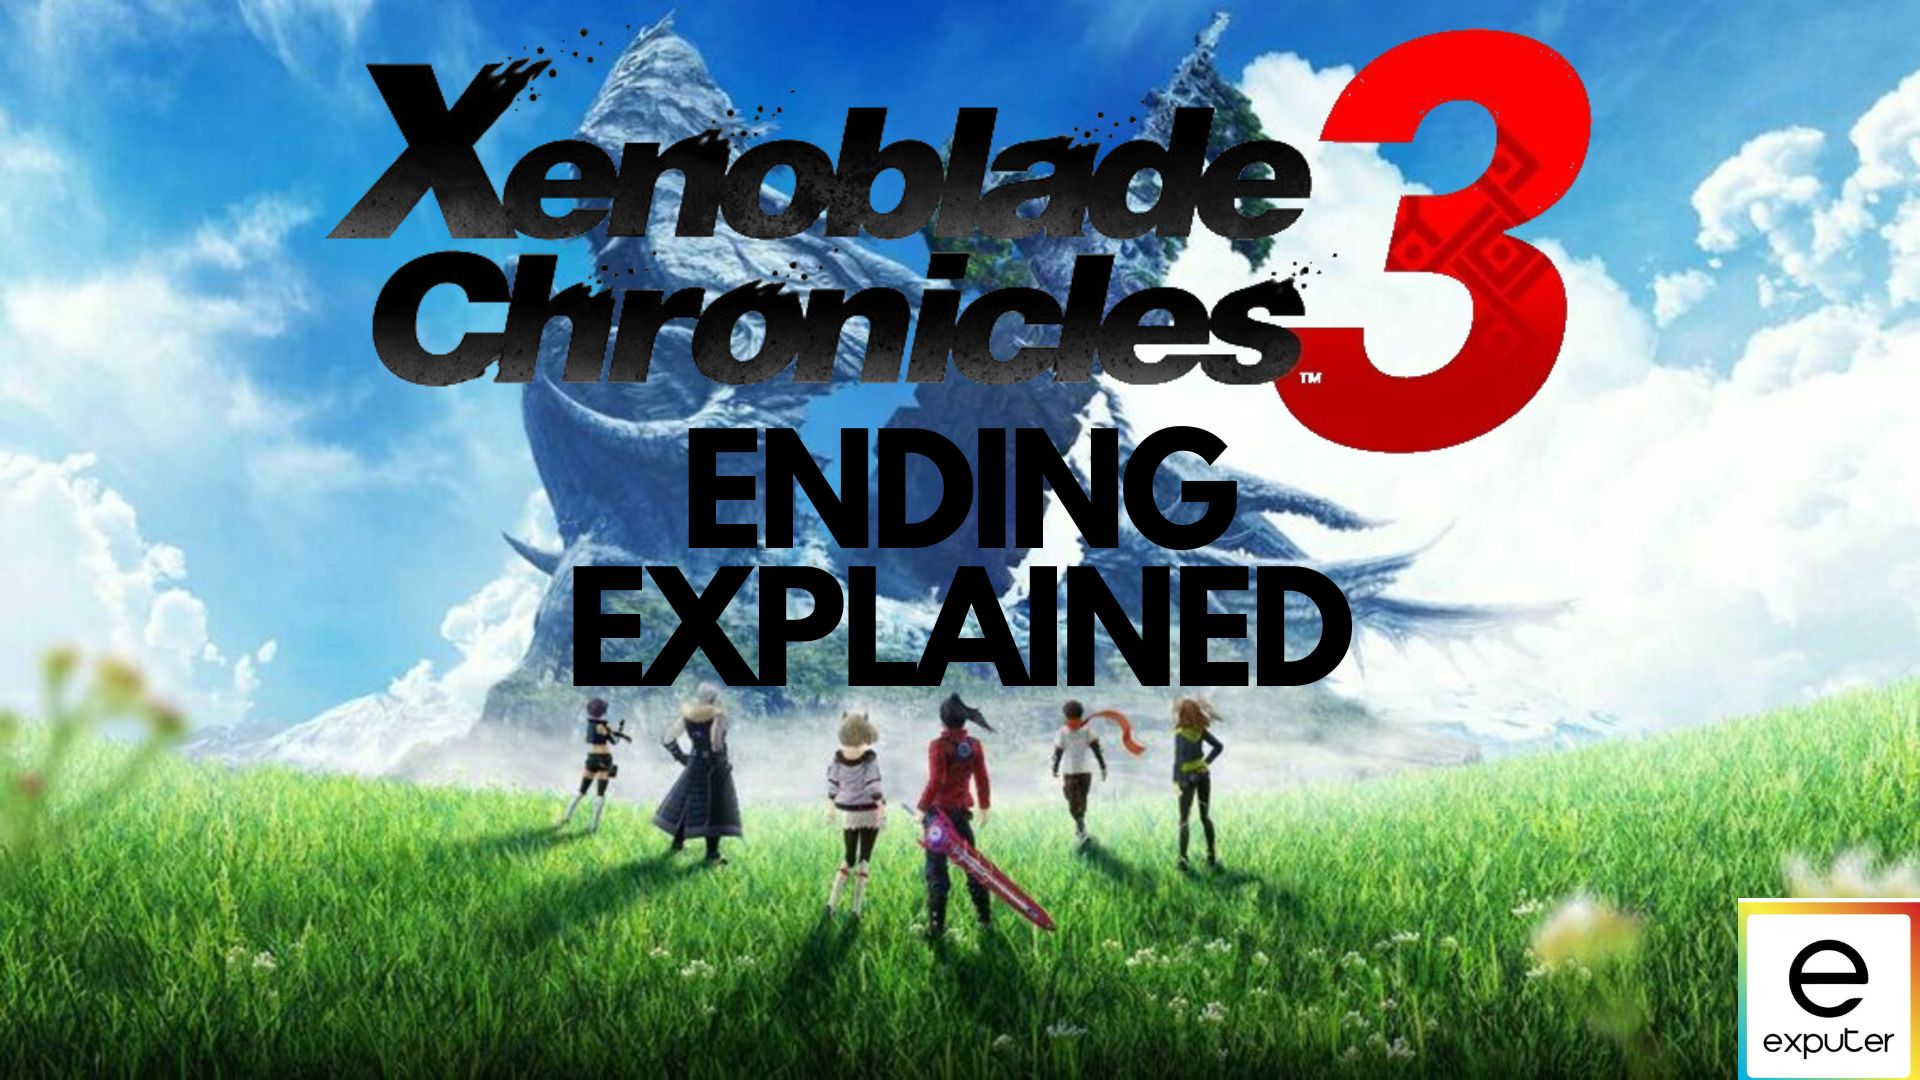 Xenoblade Chronicles 3 Ending Explained  eXputer.com